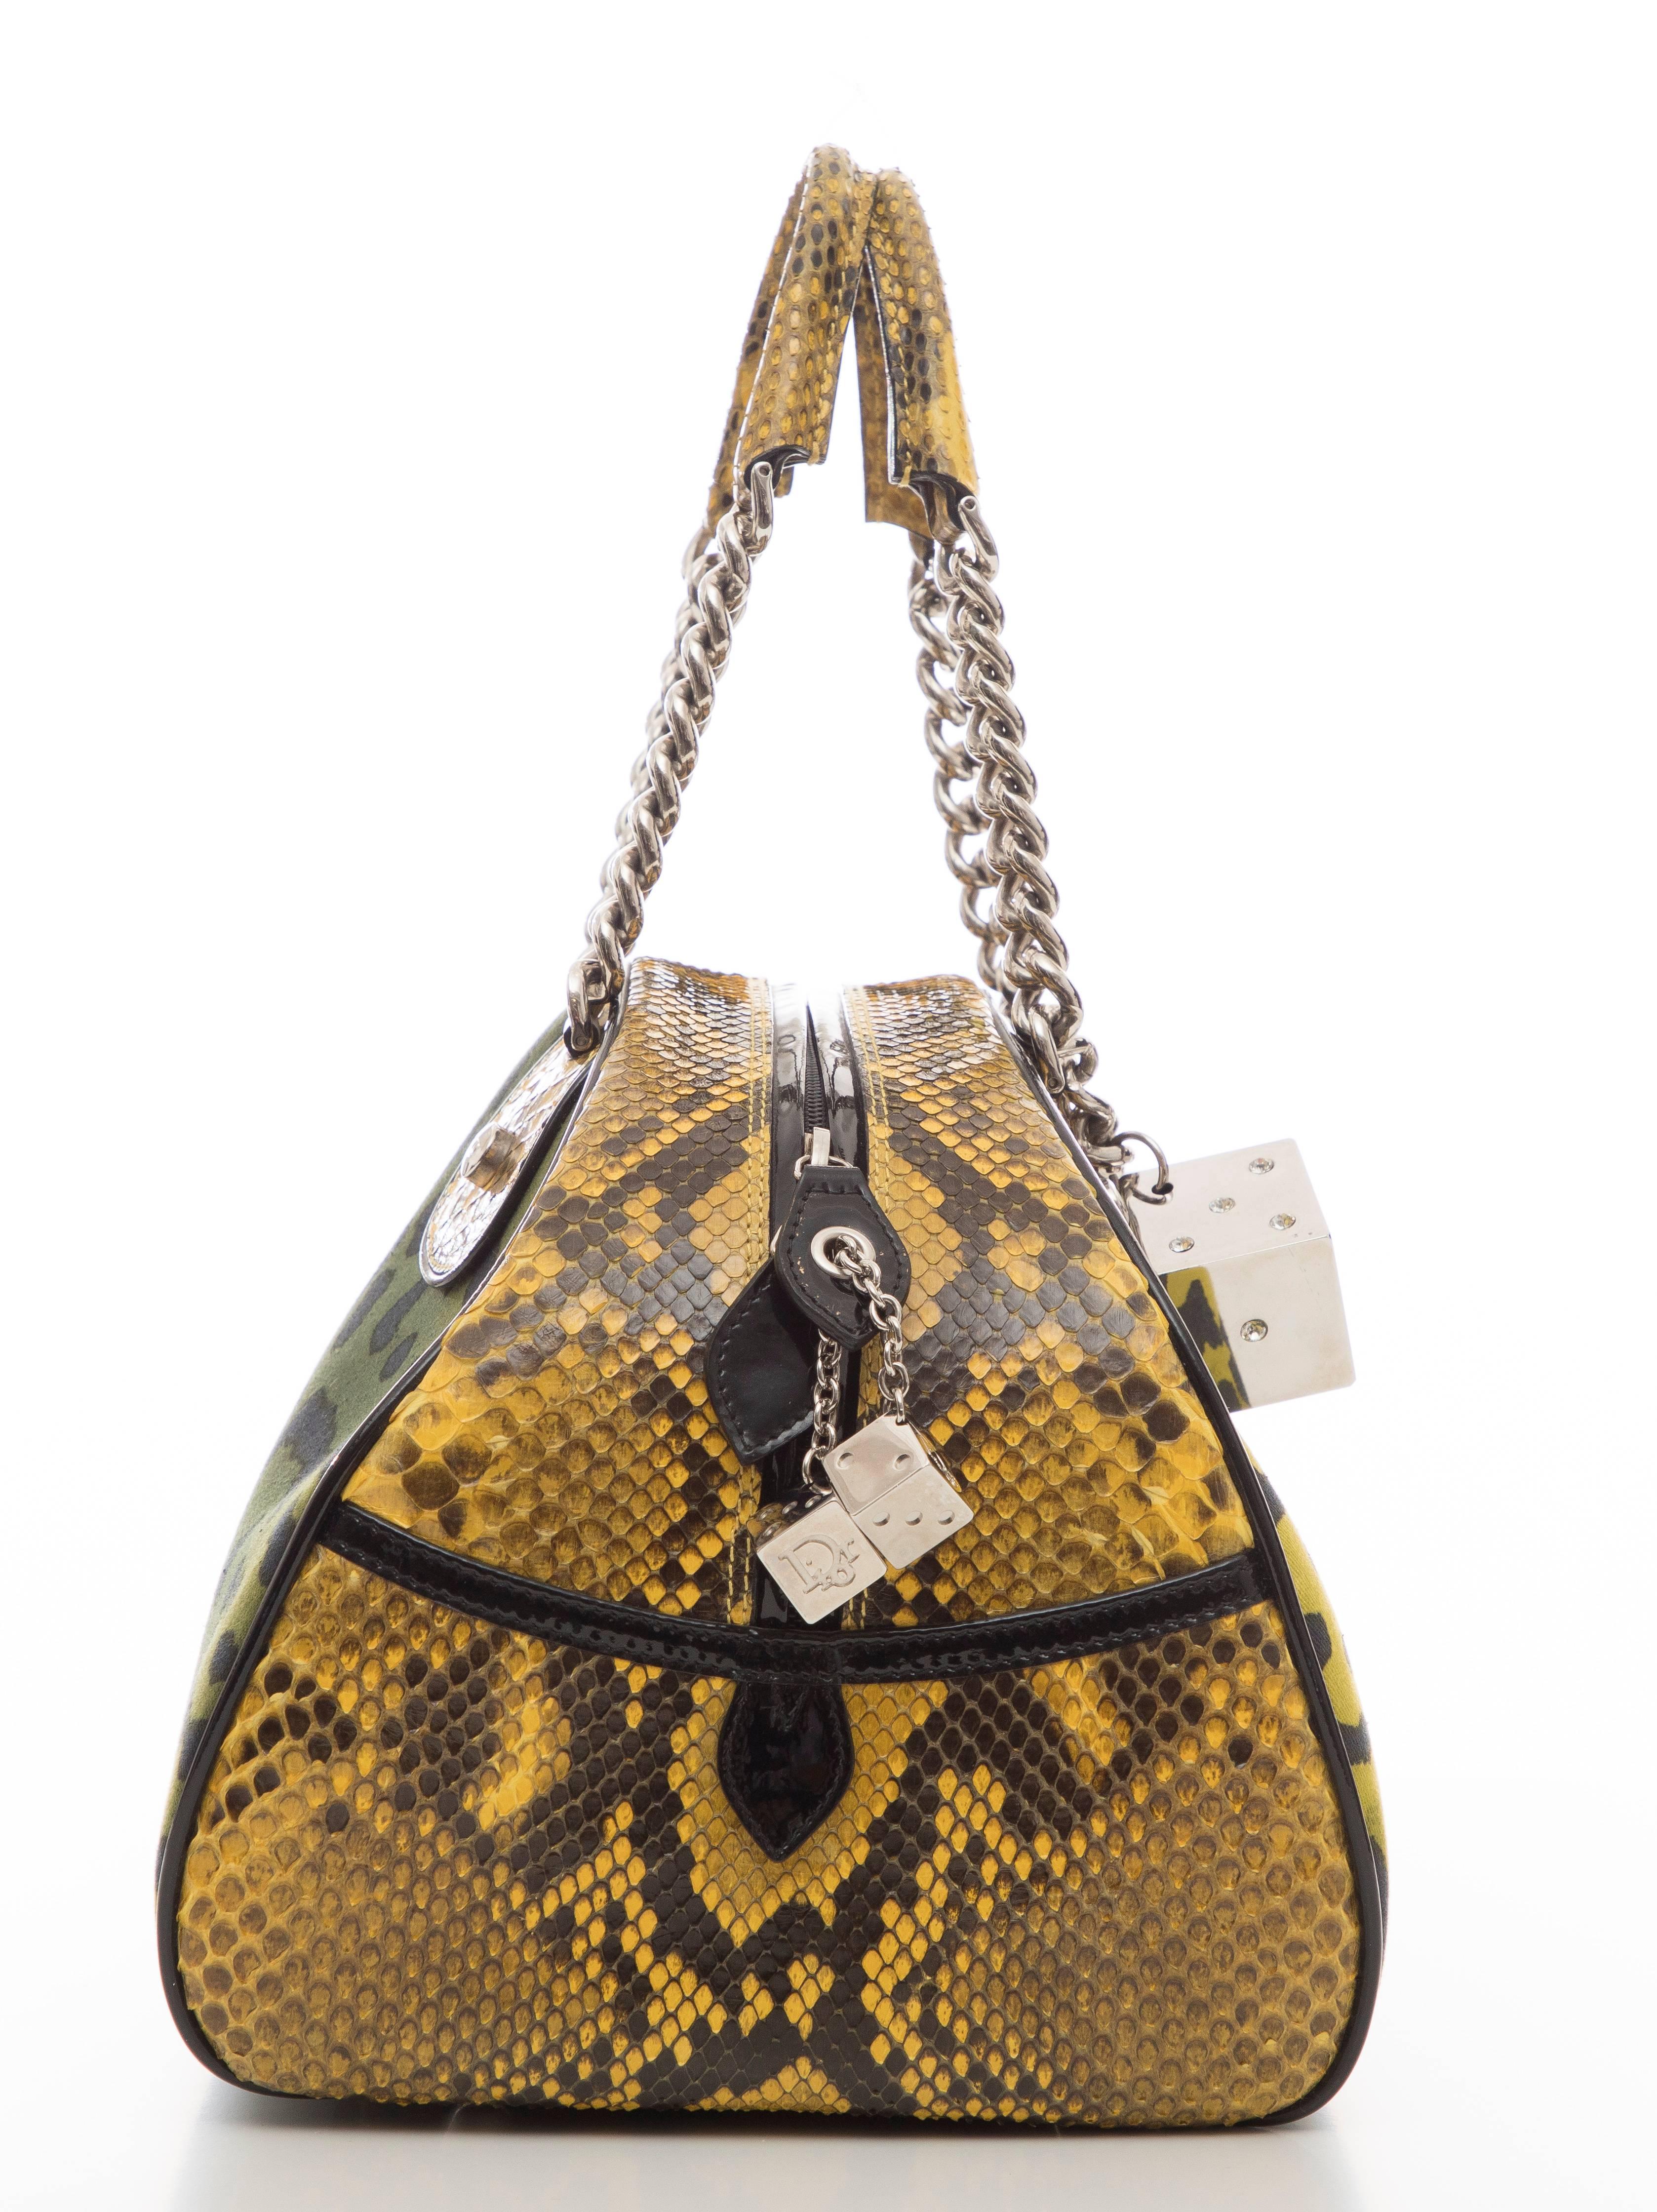 Women's John Galliano Christian Dior Runway Leopard Python Gambler Handbag, Fall 2004